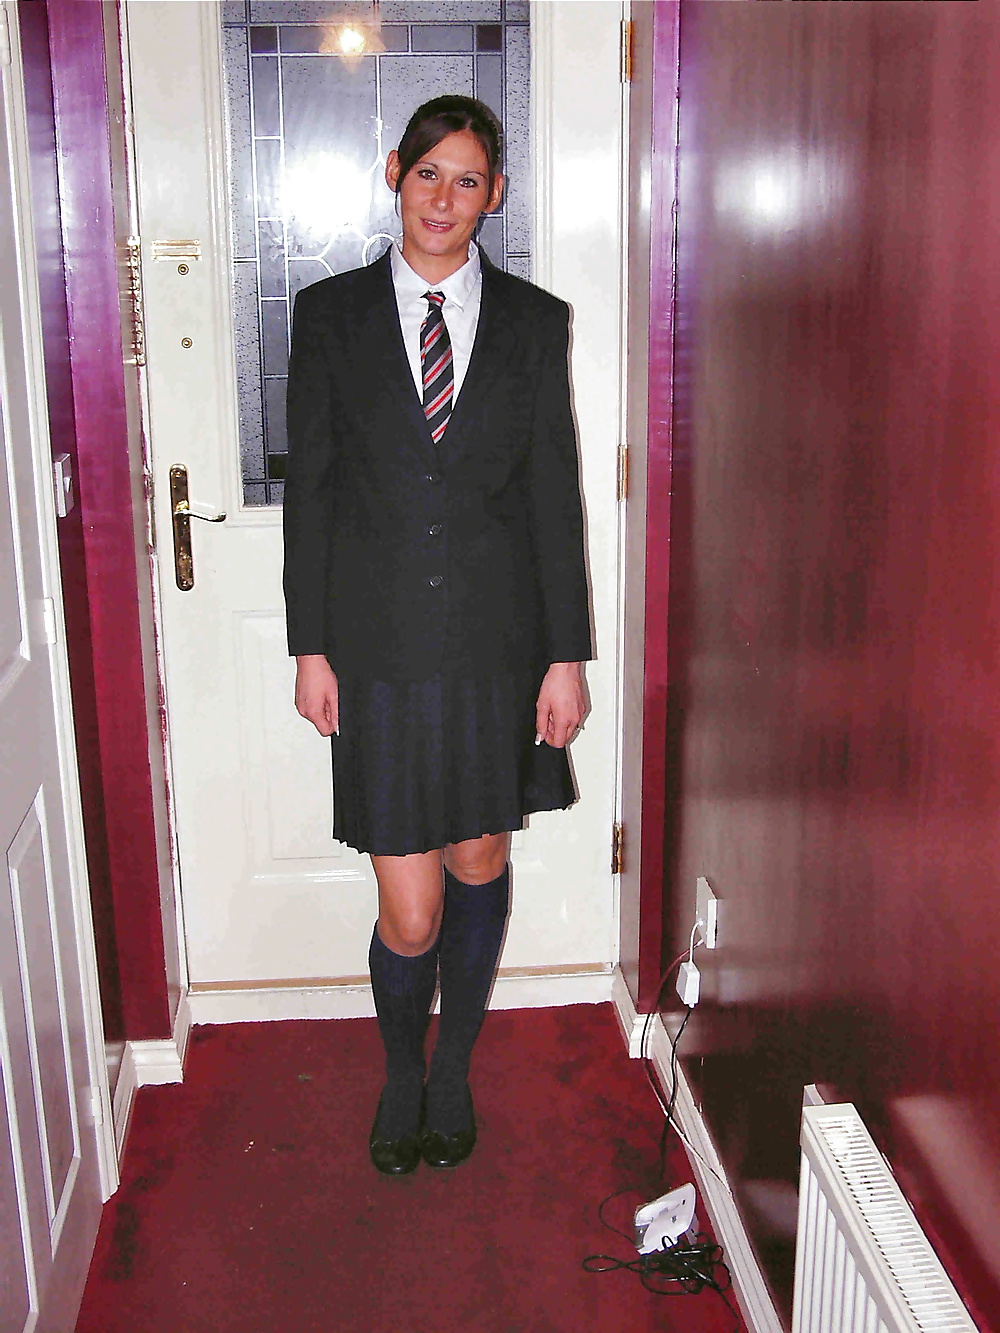 The Horny Milf dressed as Schoolgirl adult photos